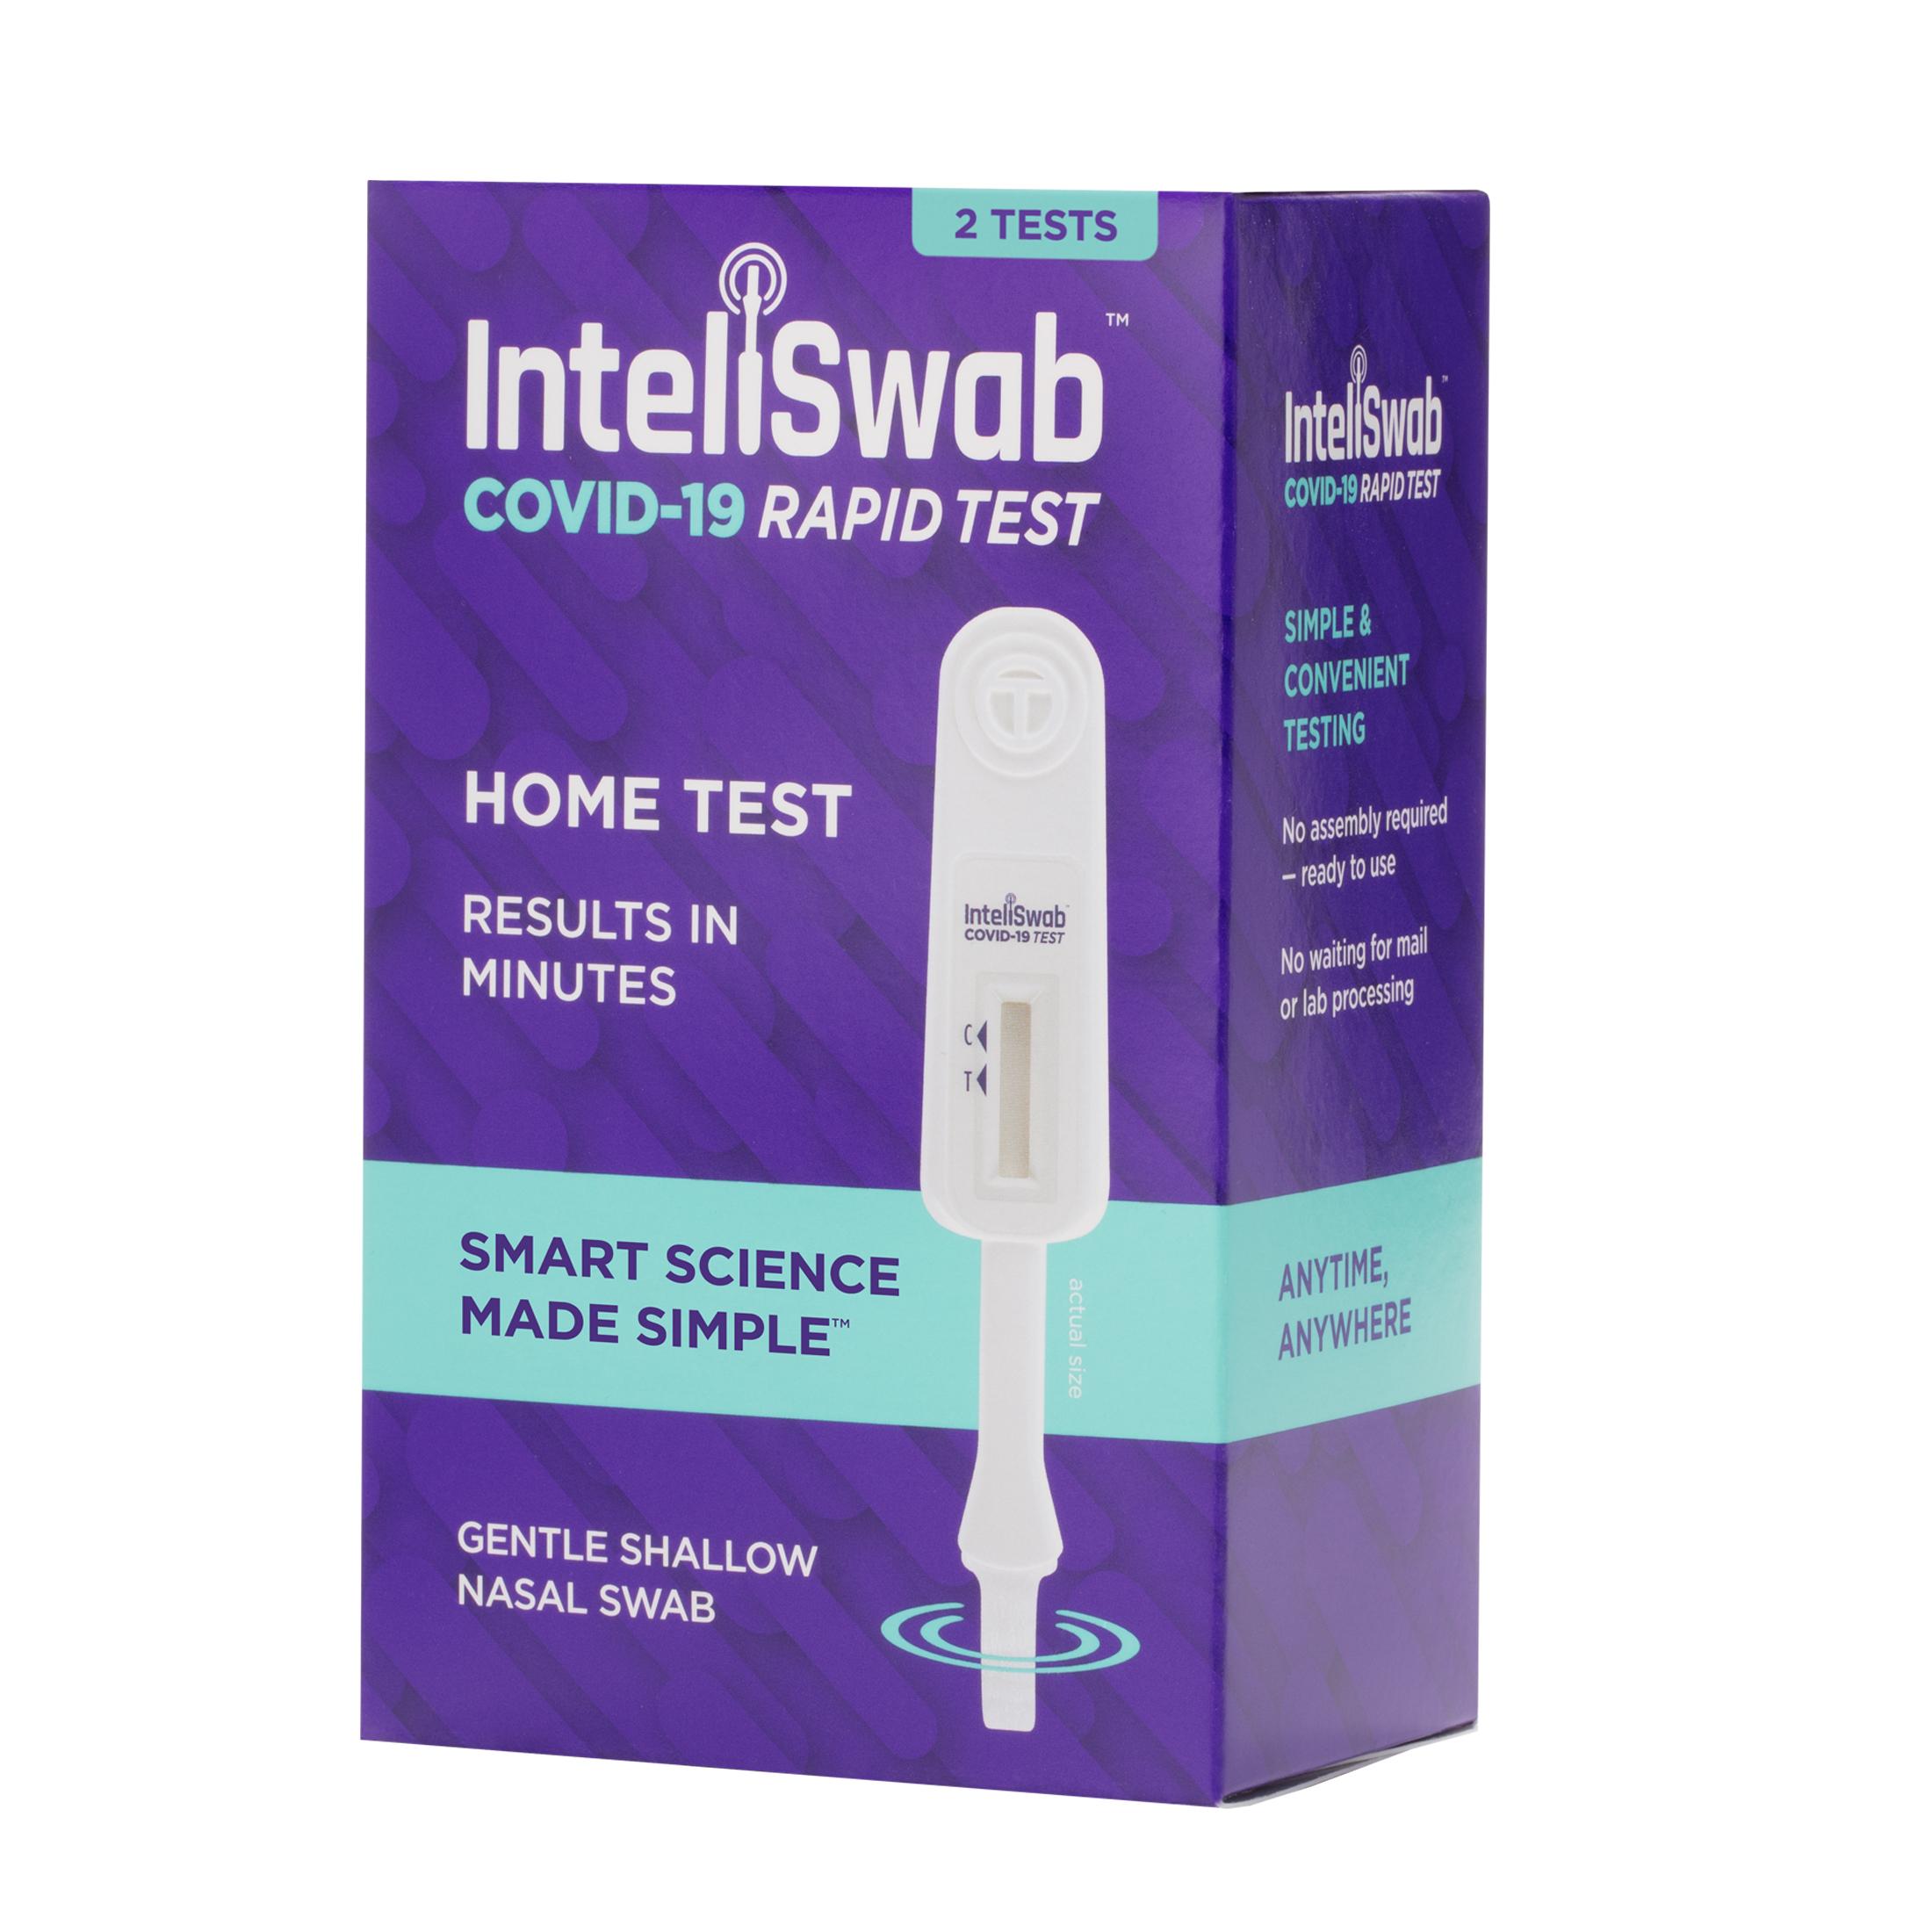 2 OraSure InteliSwab COVID-19 Rapid Antigen Test for $14